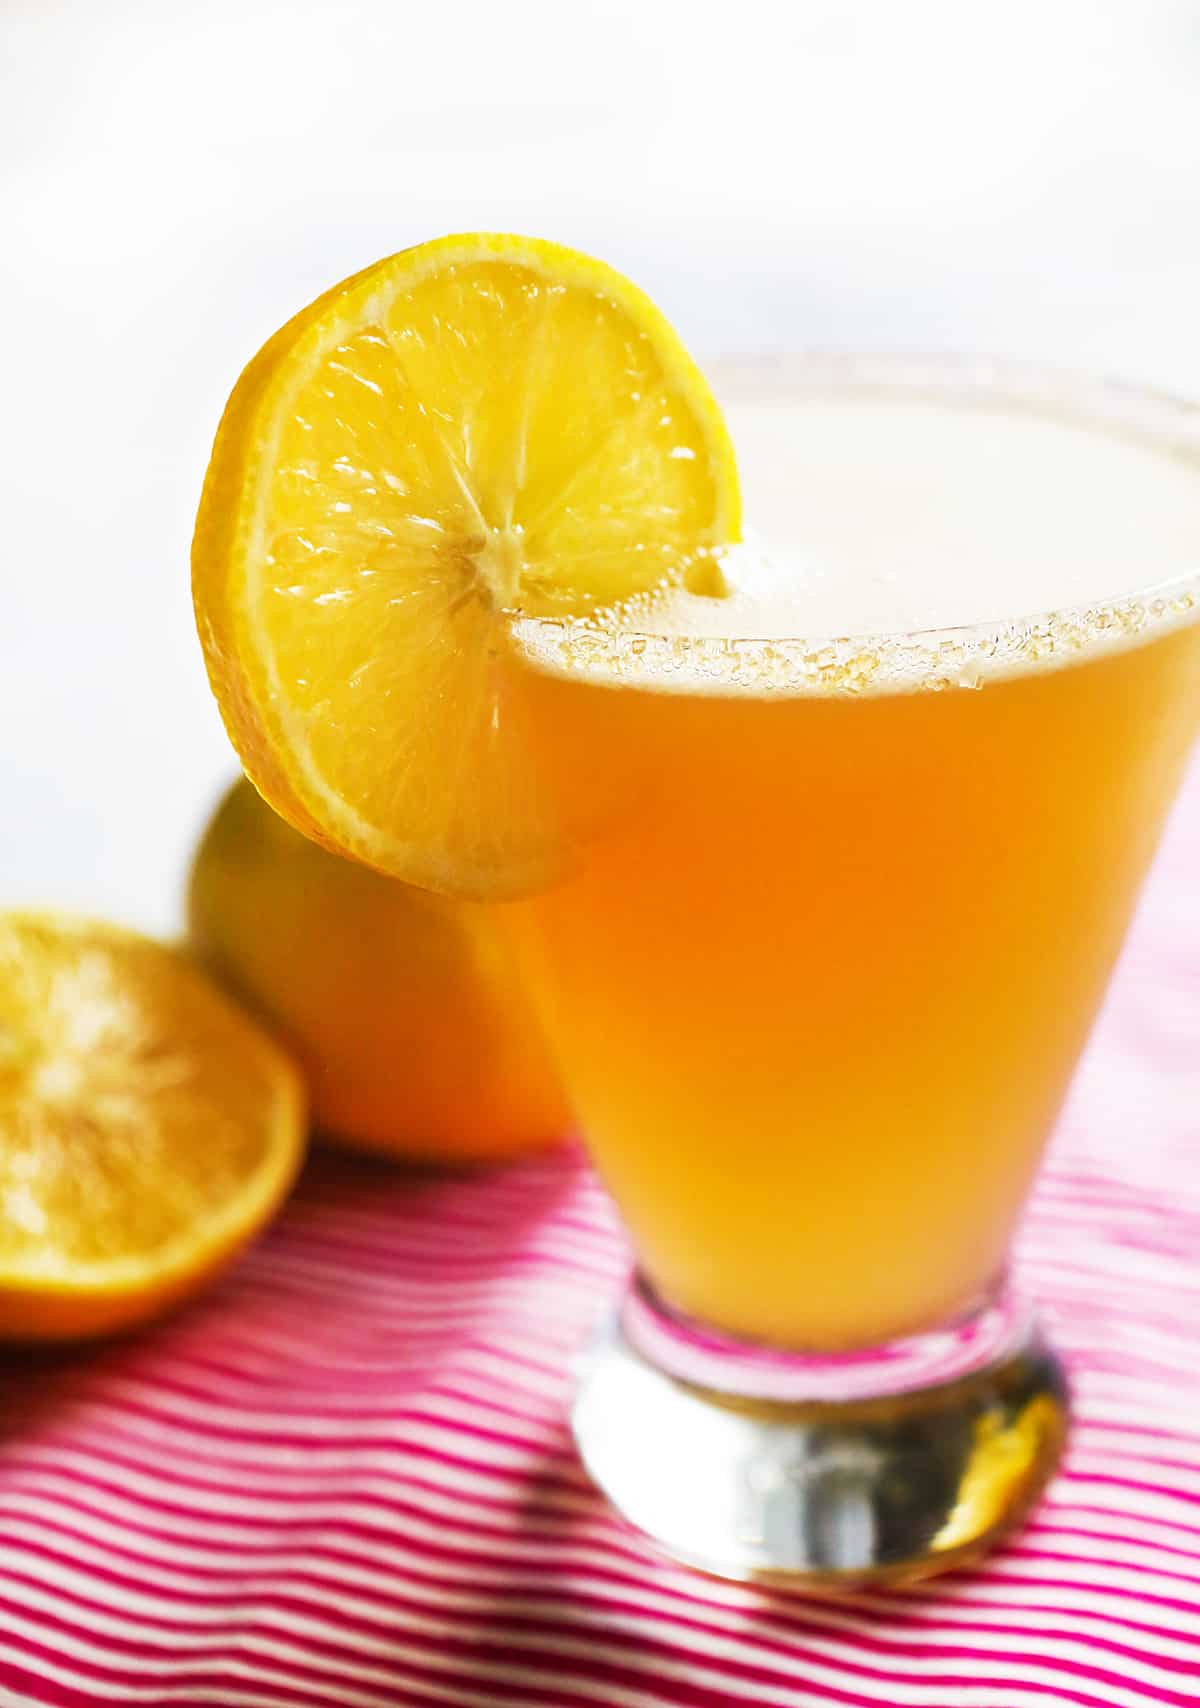 Lemon drop cocktail with lemon slice on the rim of the glass.